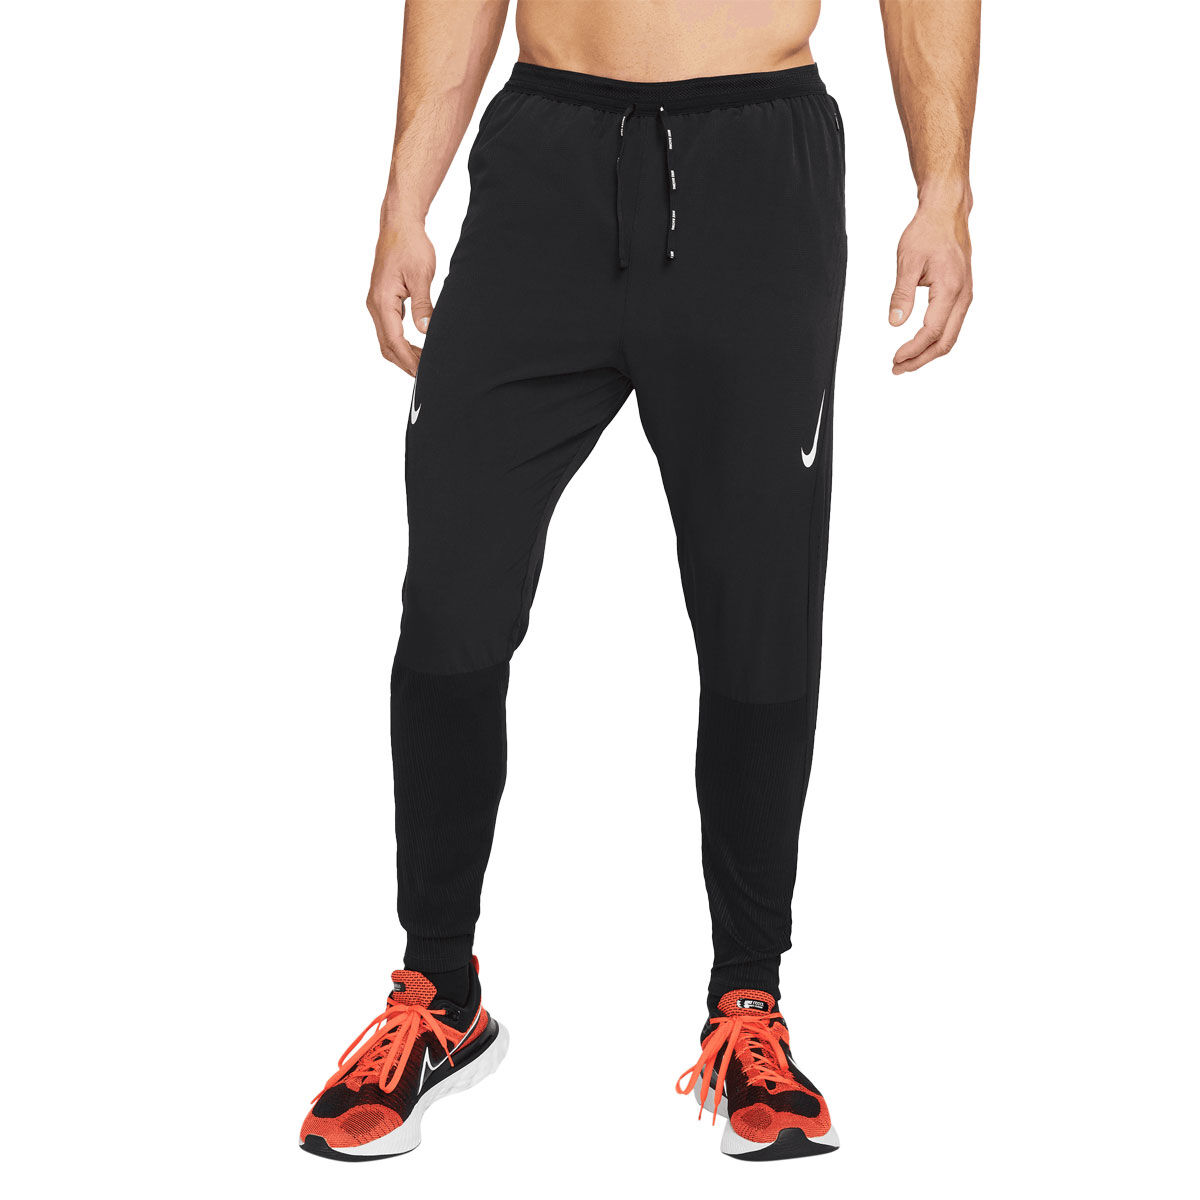 Multicolor joggers men, track pants for men regular fit, track pants with  zipper pockets, lower for men, sports pant, track pant